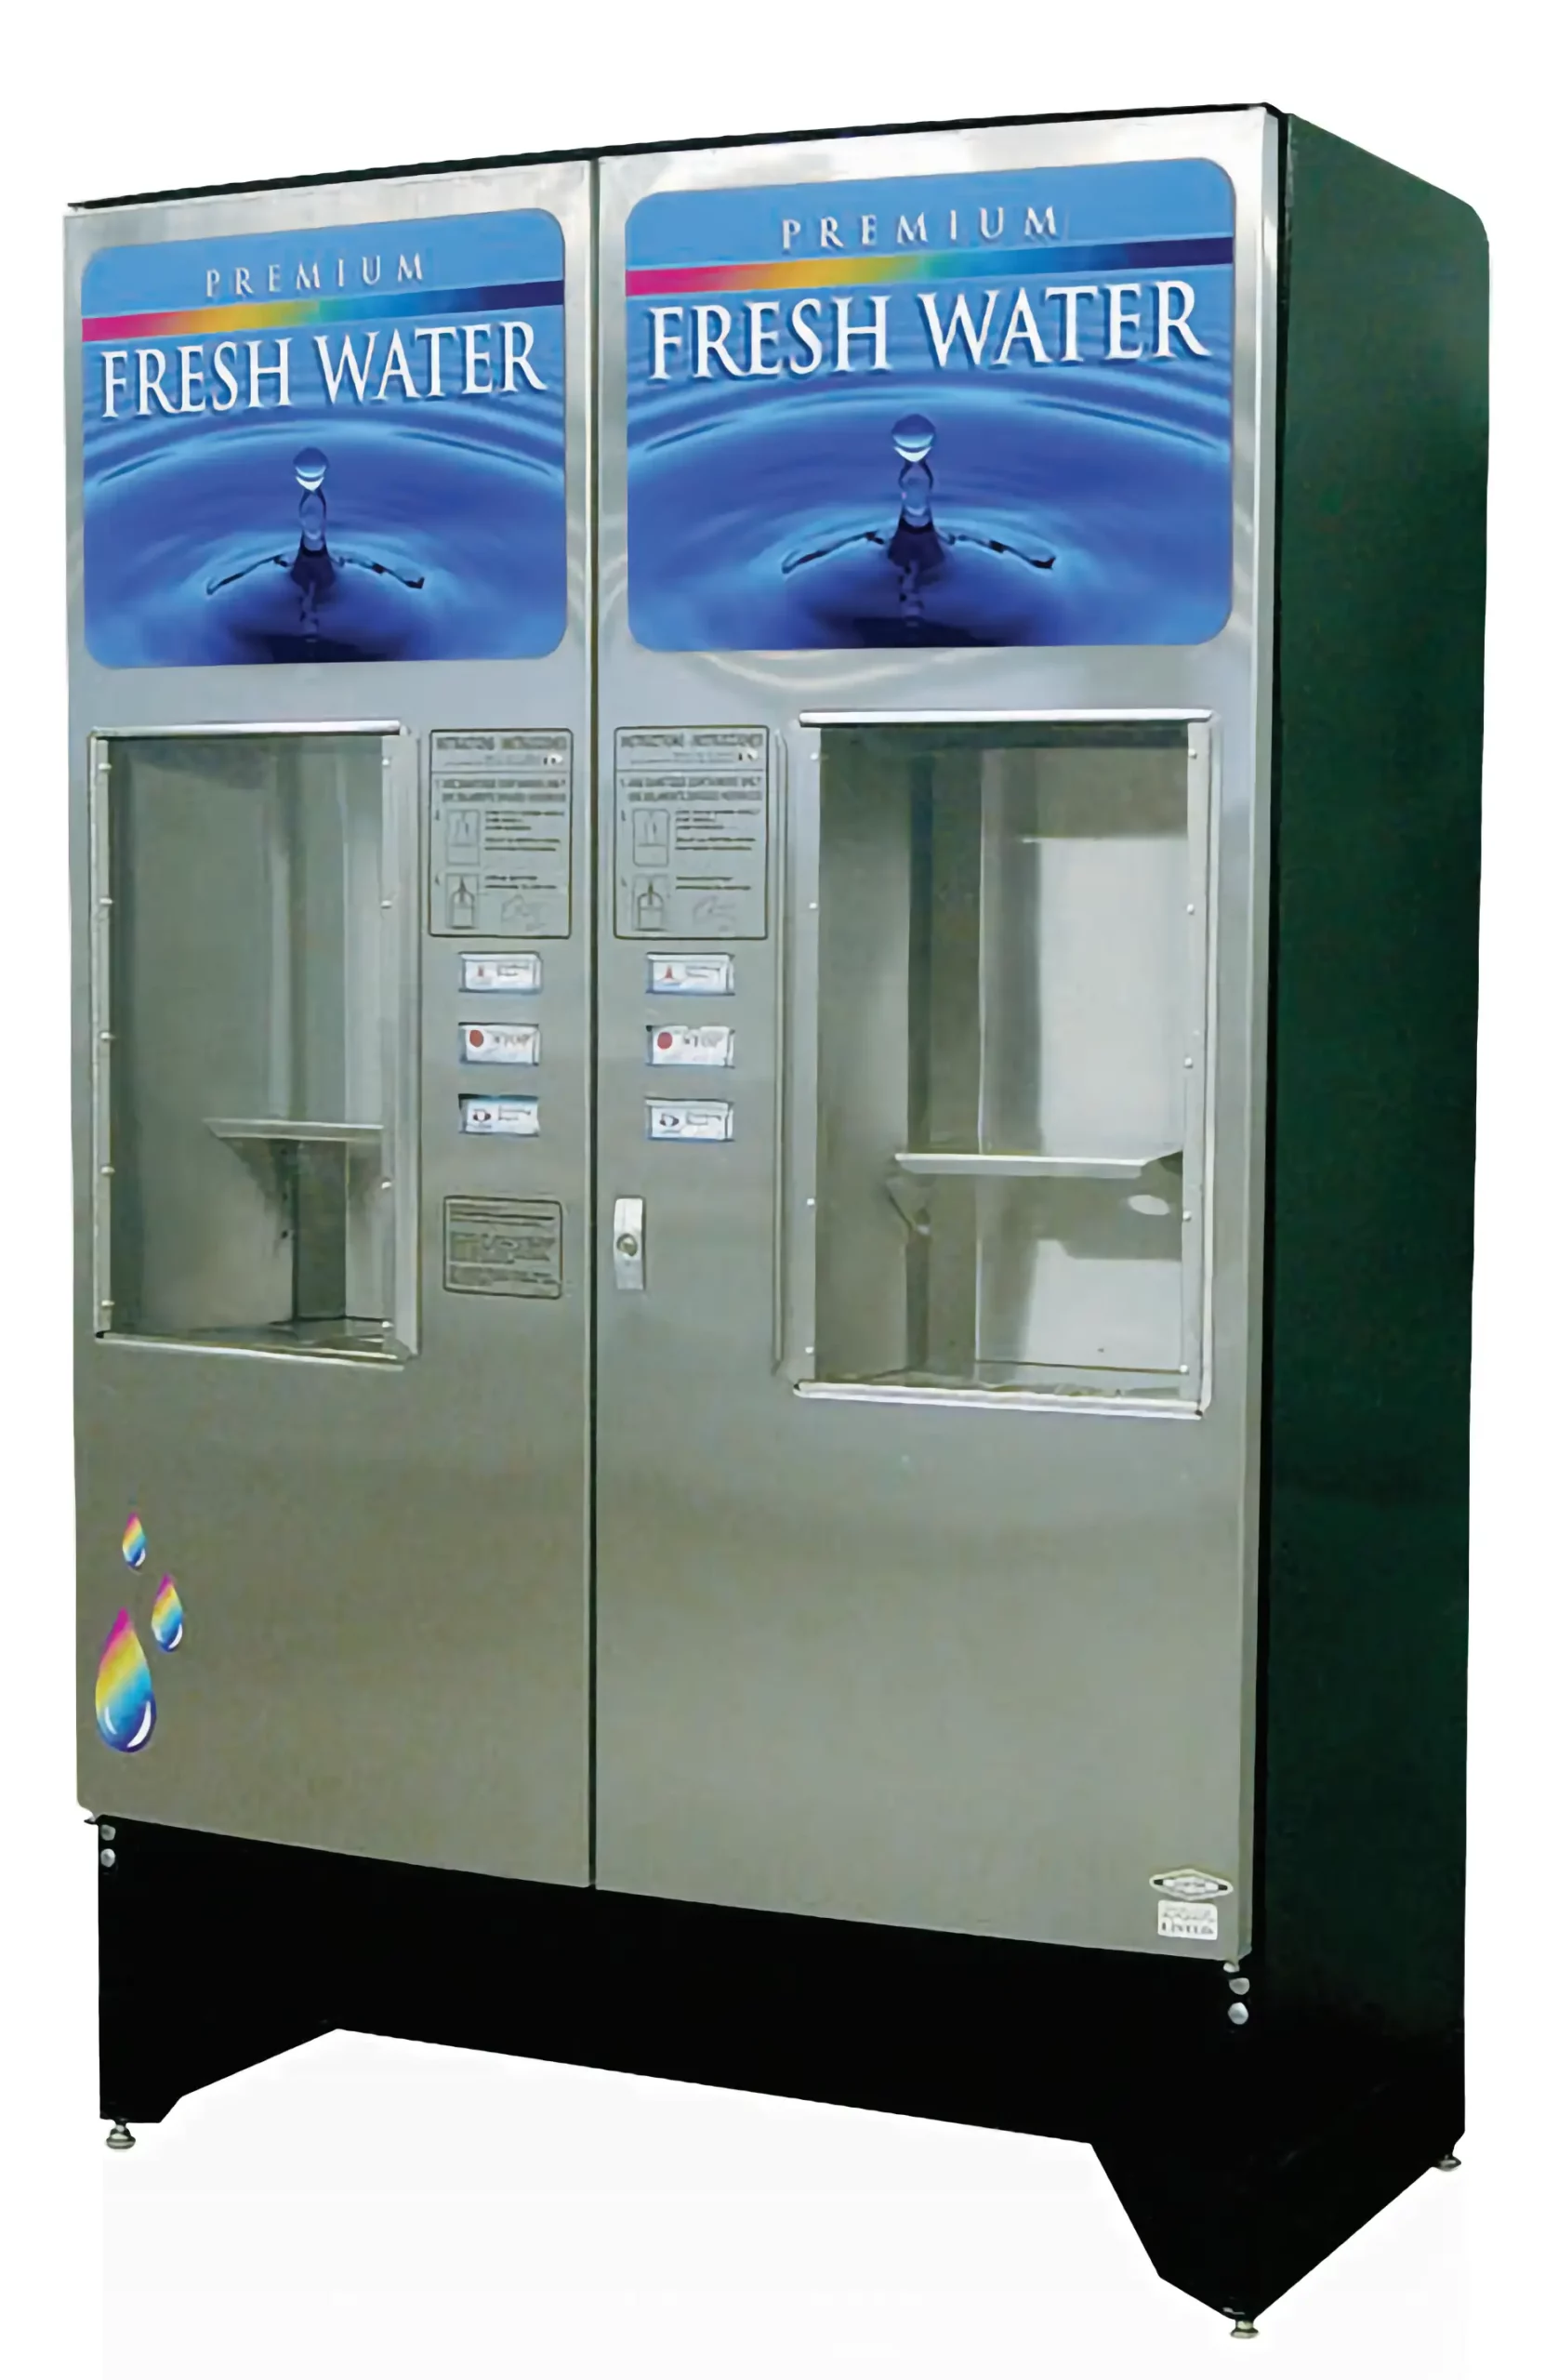 30L Automatic Hot Commercial Water Dispenser Machine 3000W, 50L/H